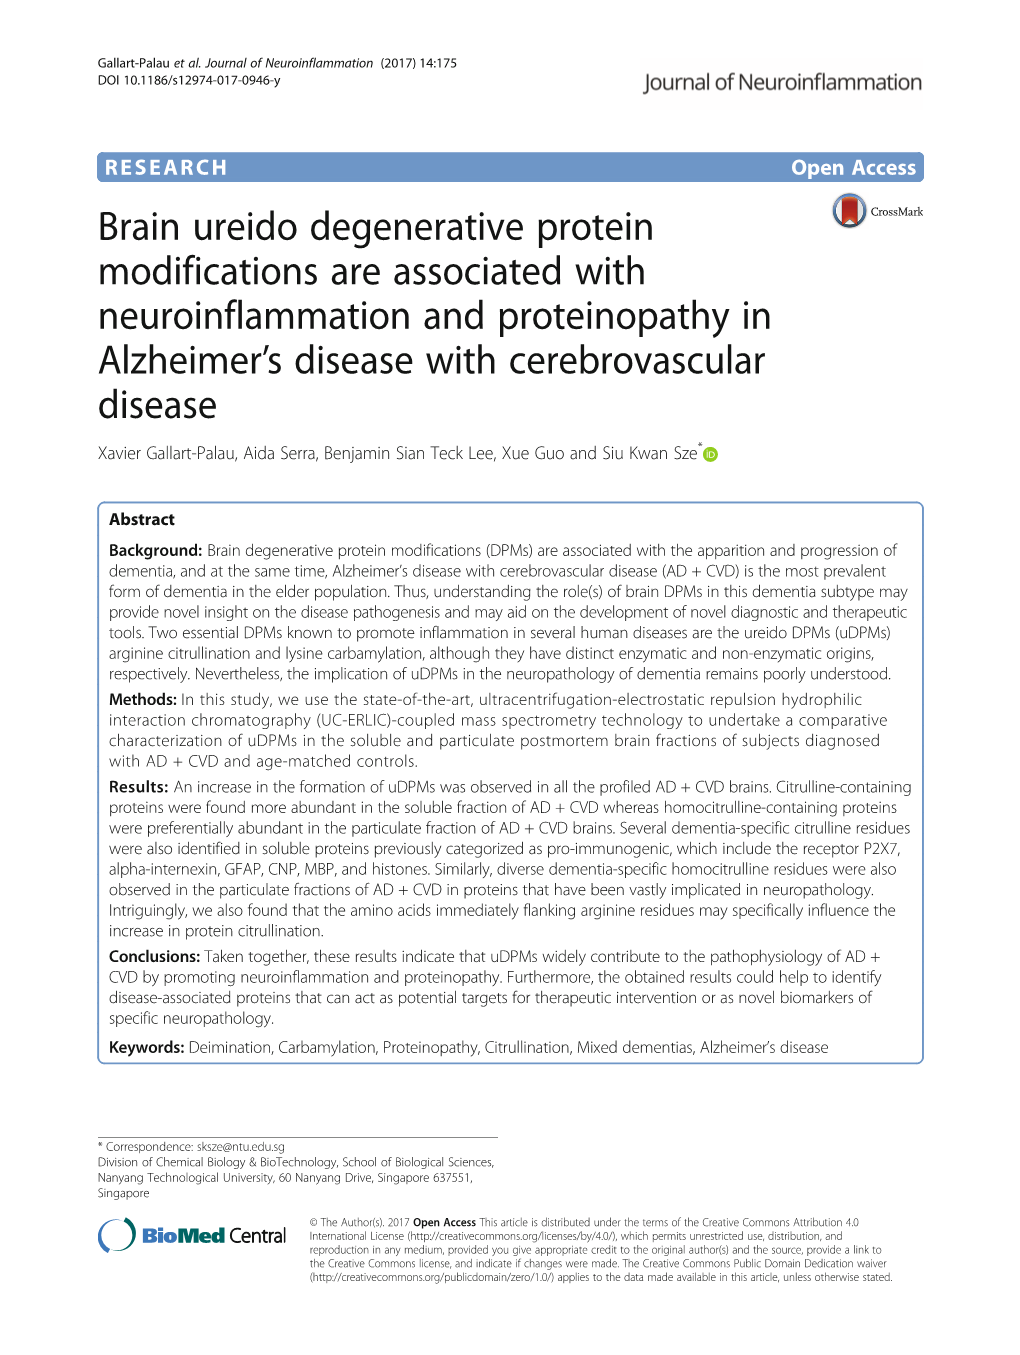 Brain Ureido Degenerative Protein Modifications Are Associated With